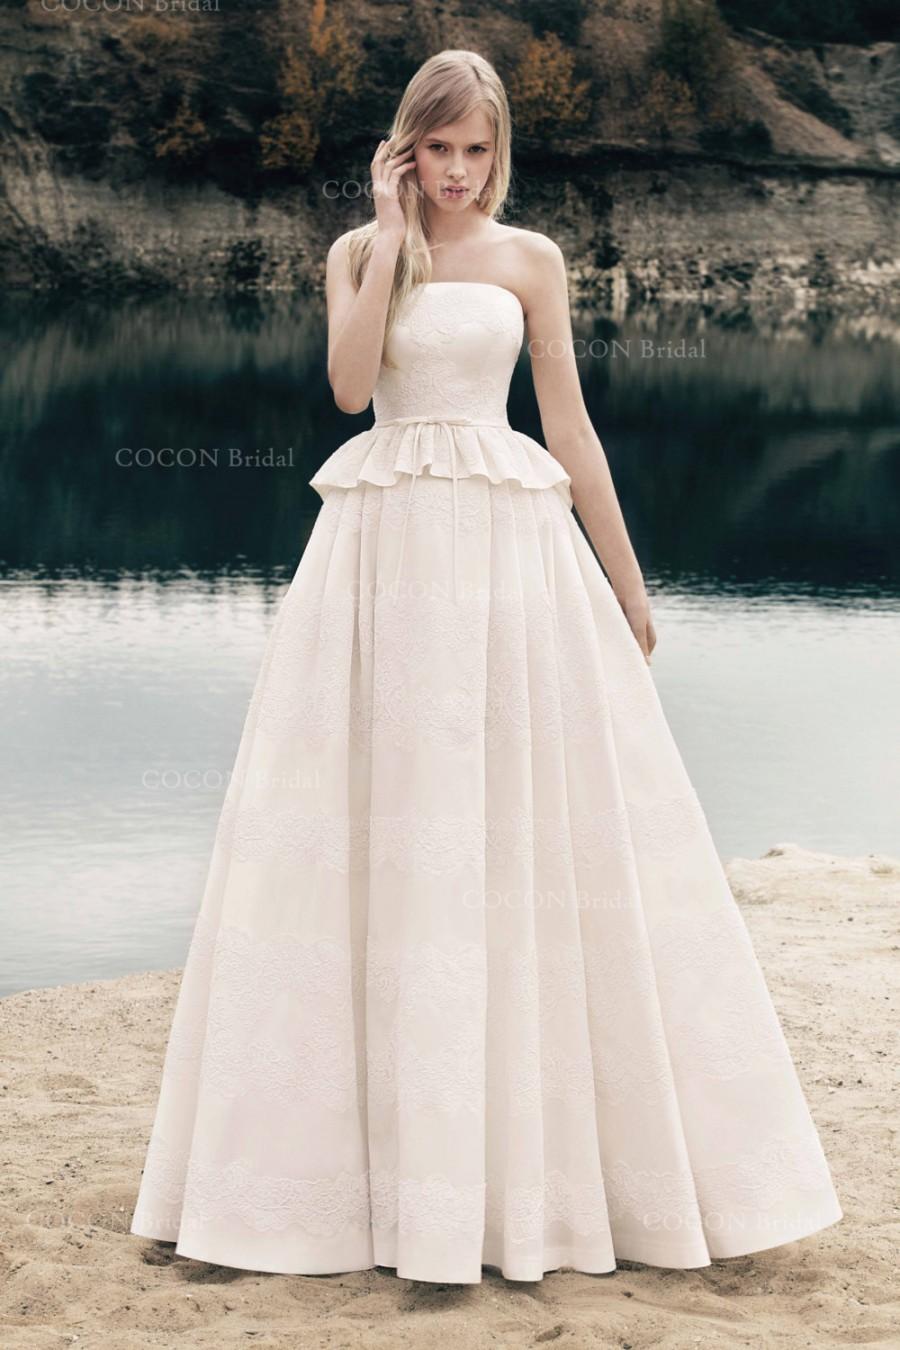 زفاف - Handmade Ball gown Wedding Mikado Dress with corded lace Wedding dress in Rustic Style - "Victoria"